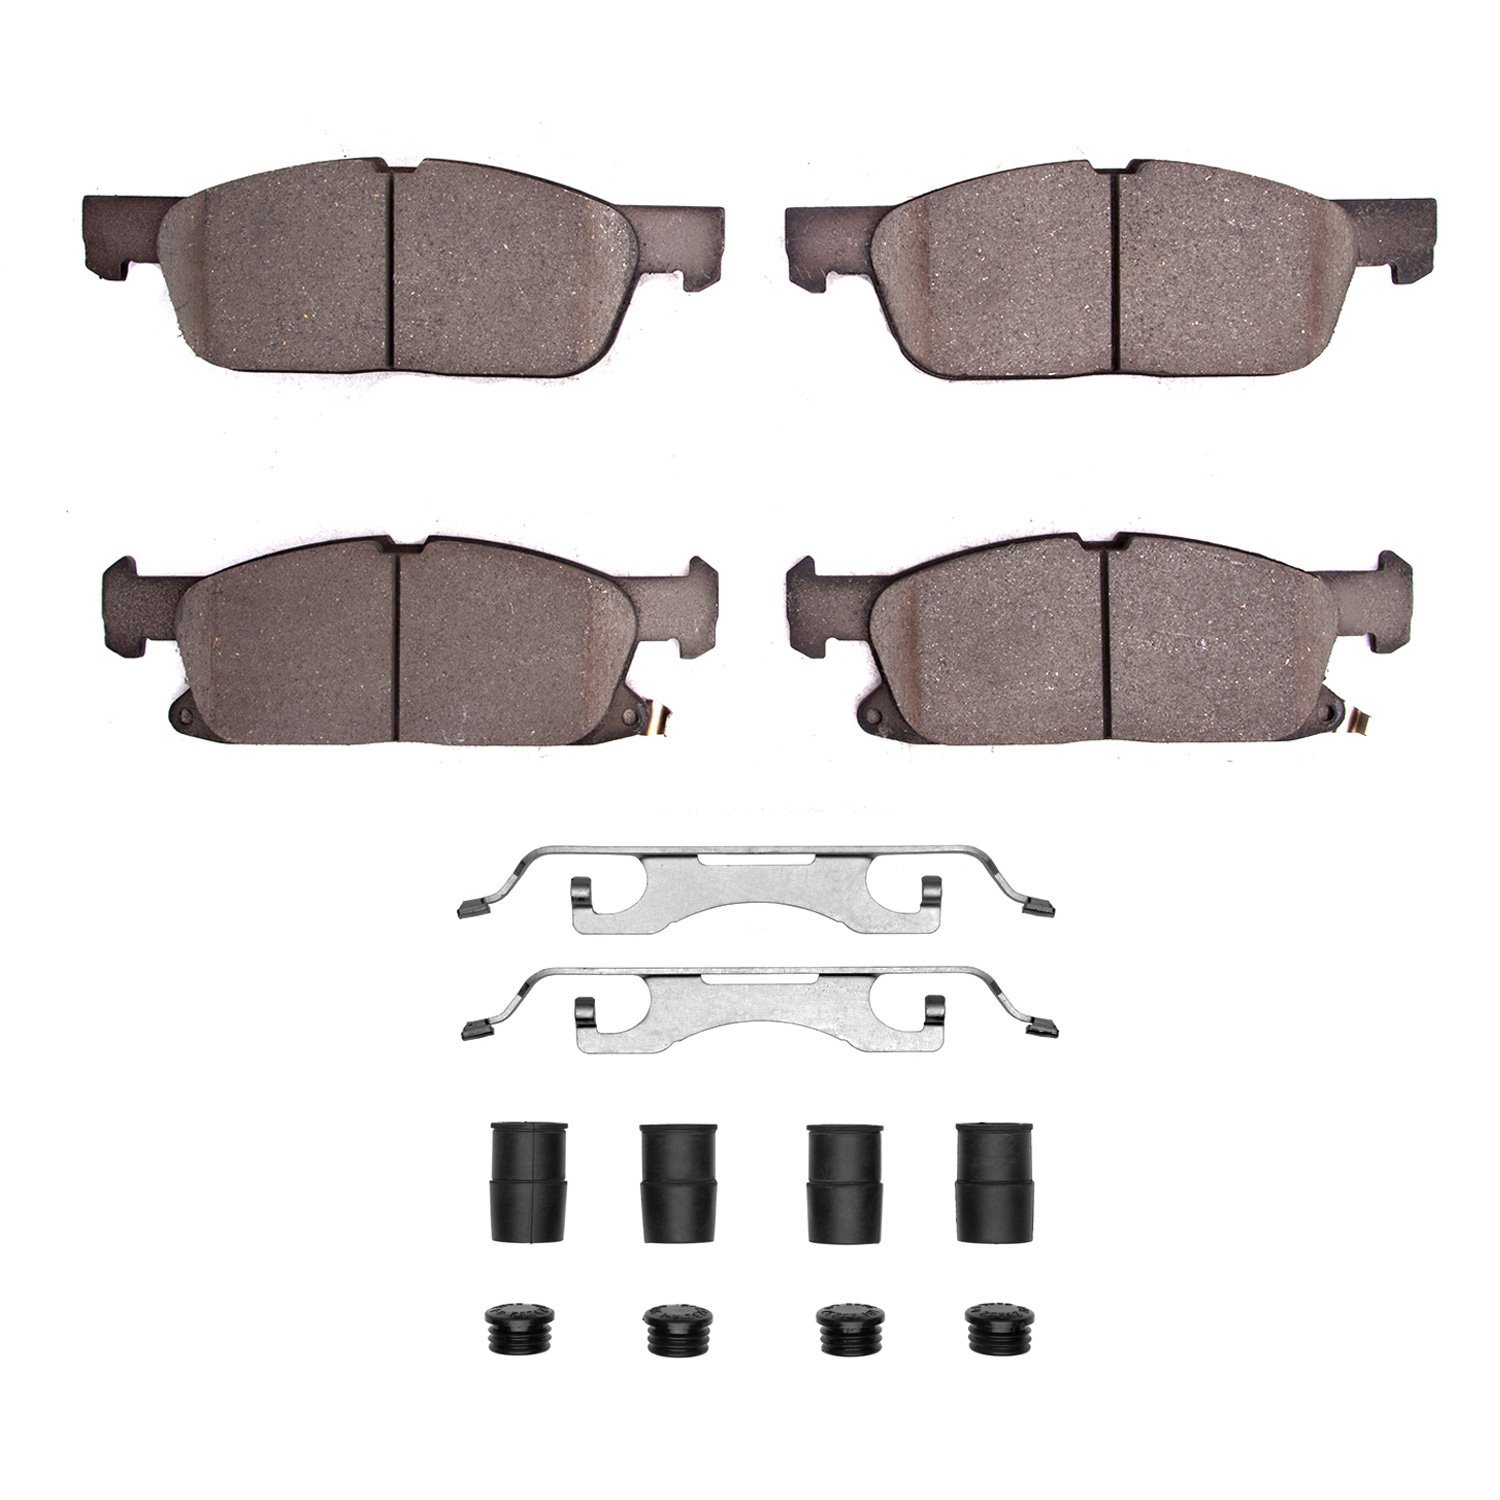 1310-1818-01 3000-Series Ceramic Brake Pads & Hardware Kit, 2015-2020 Ford/Lincoln/Mercury/Mazda, Position: Front